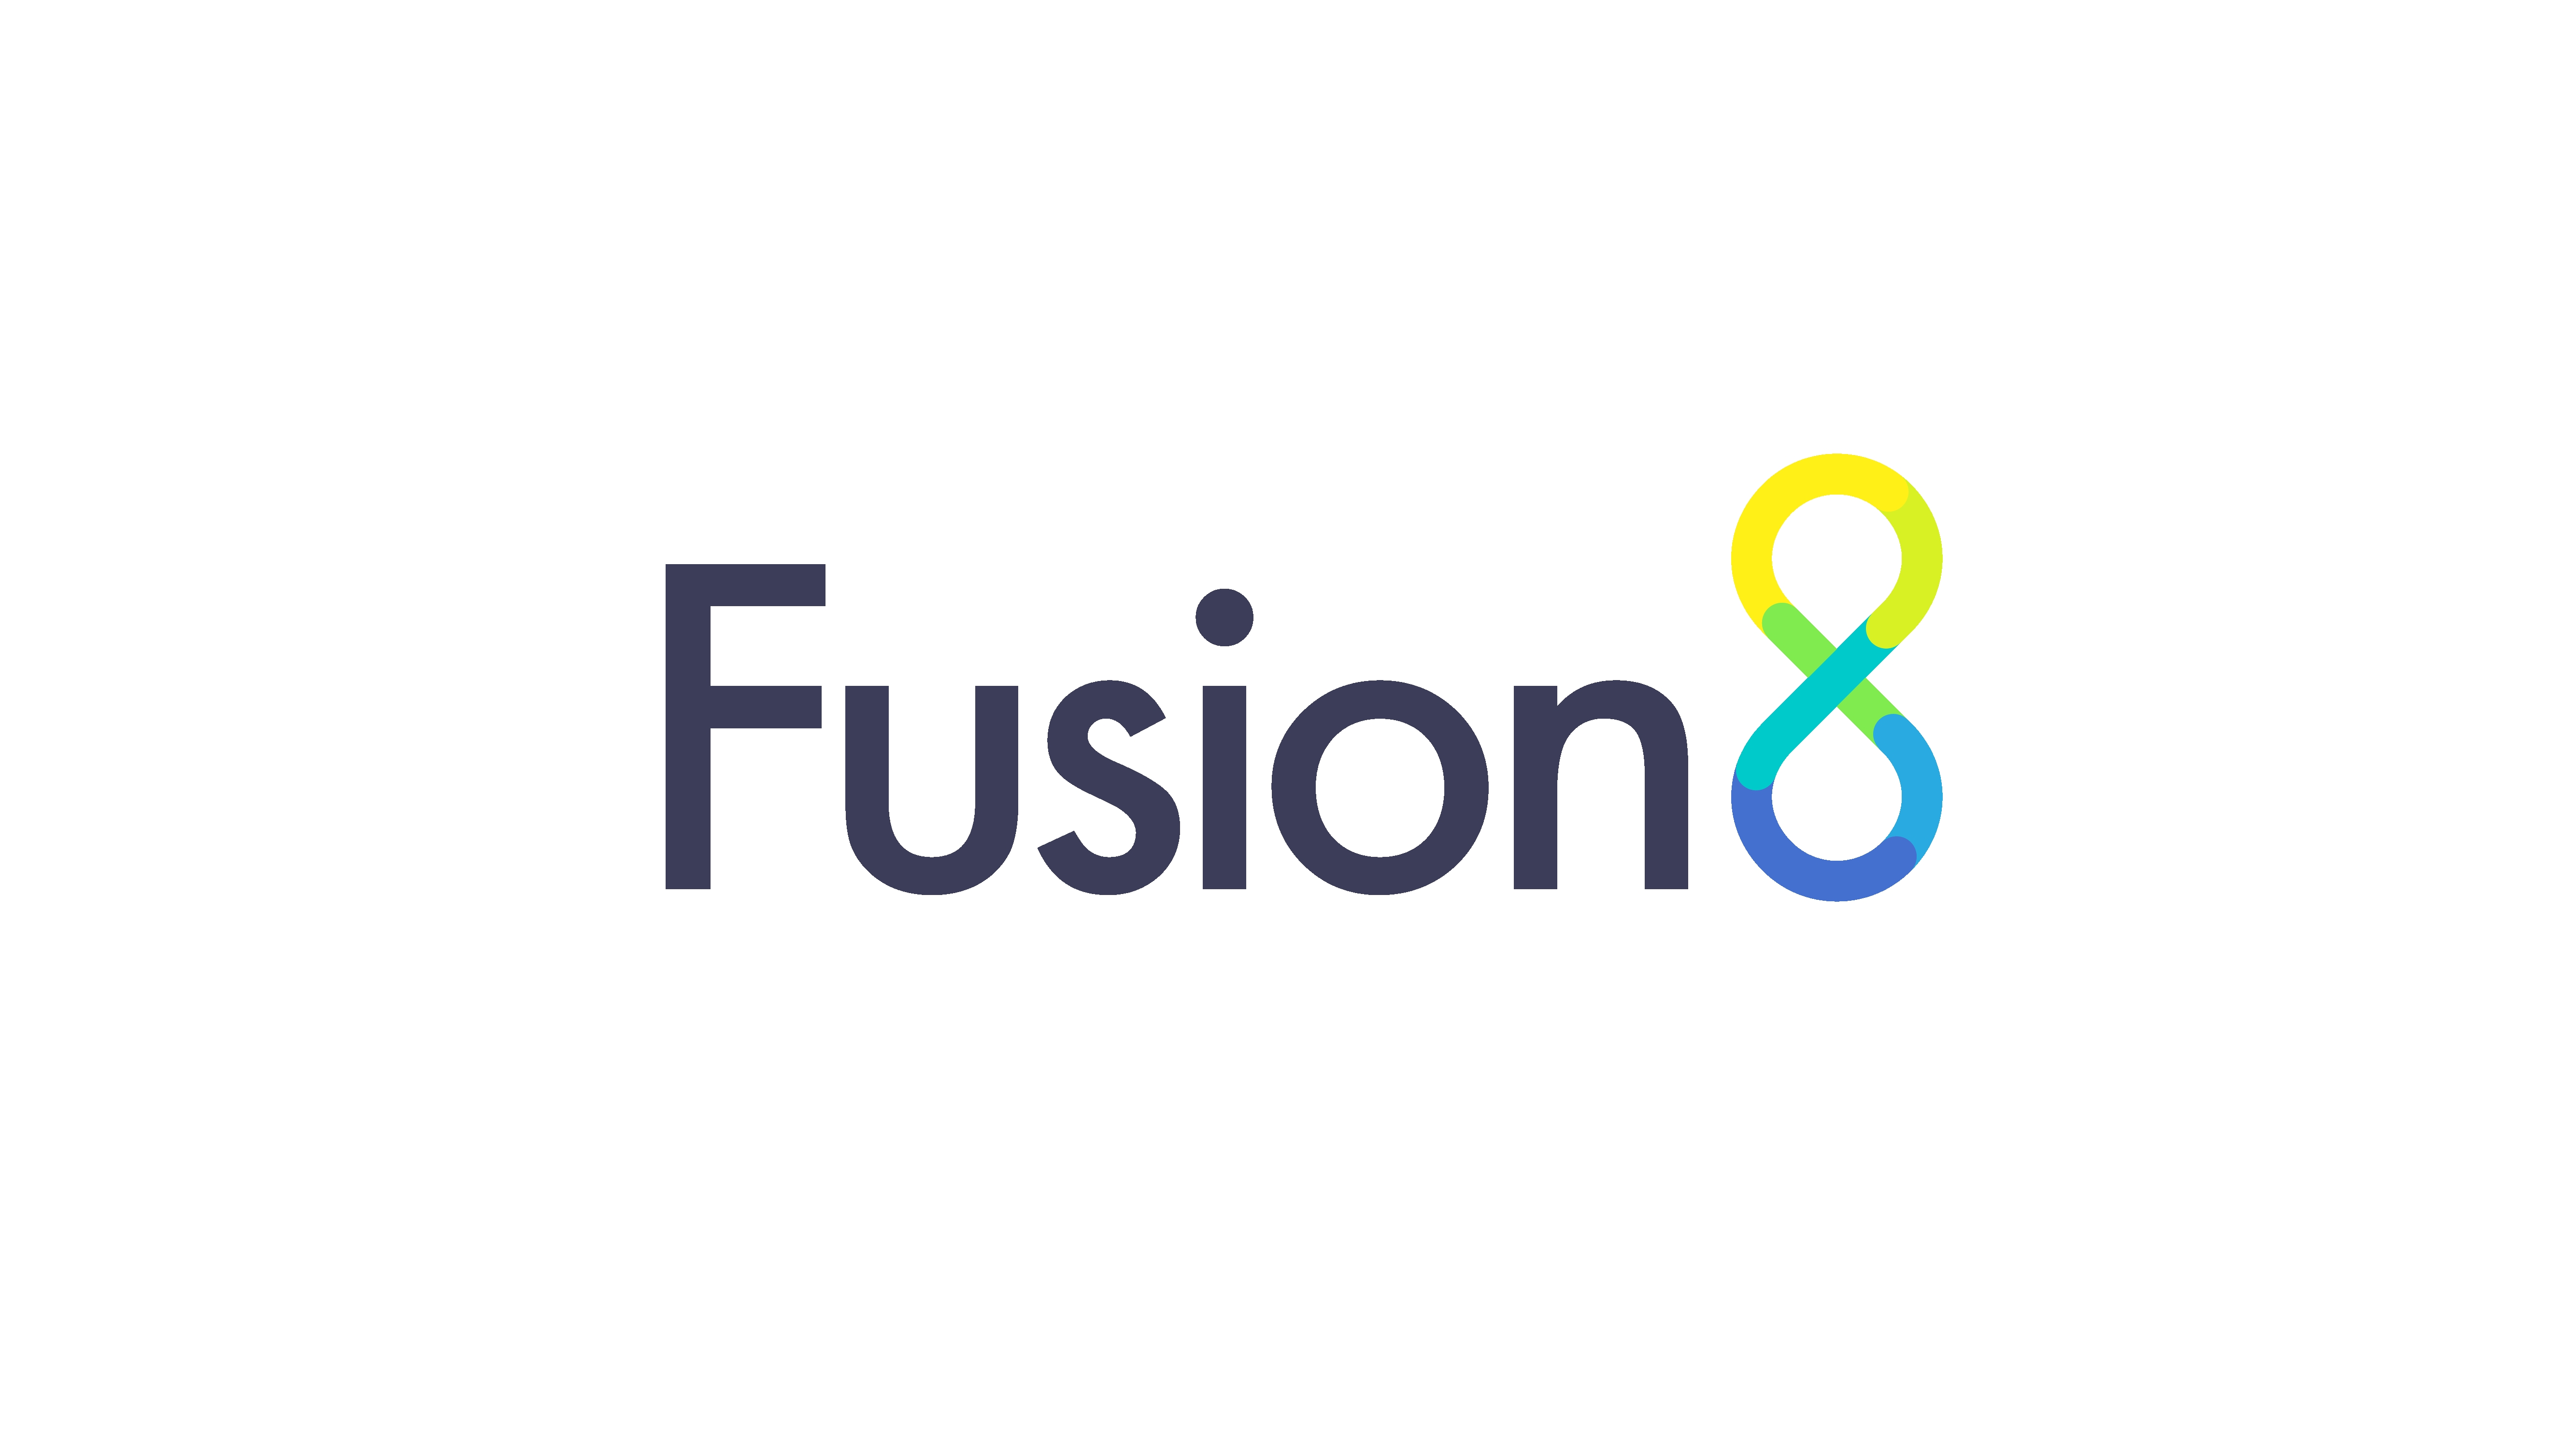 Fusion 8 logo in blue